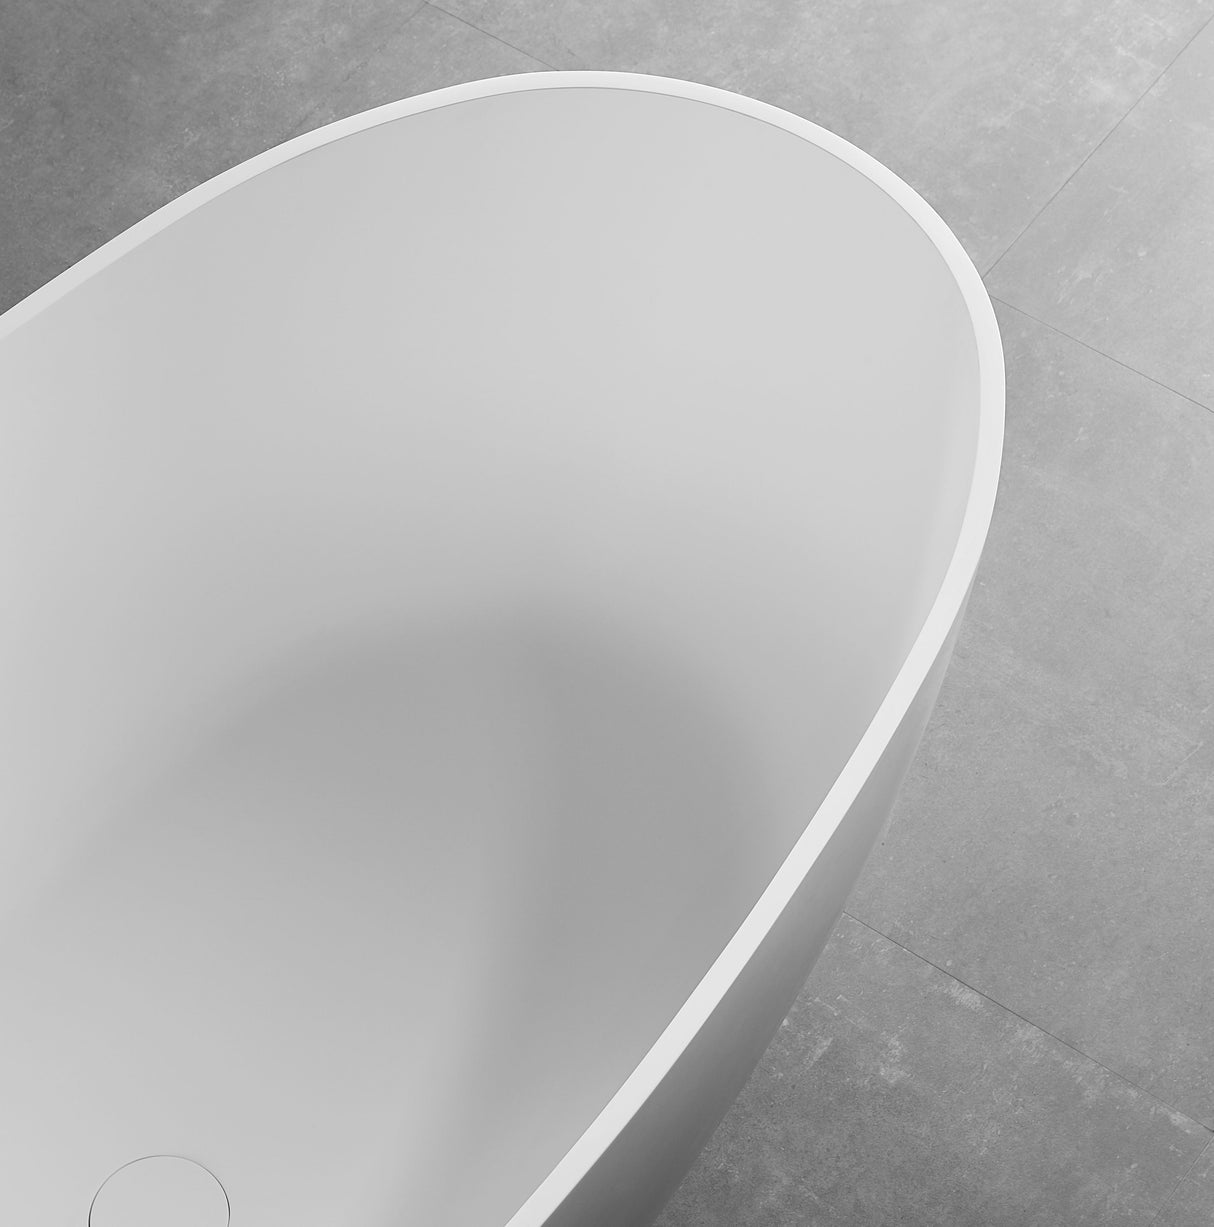 ALFI | AB9975 59" White Oval Solid Surface Resin Soaking Bathtub